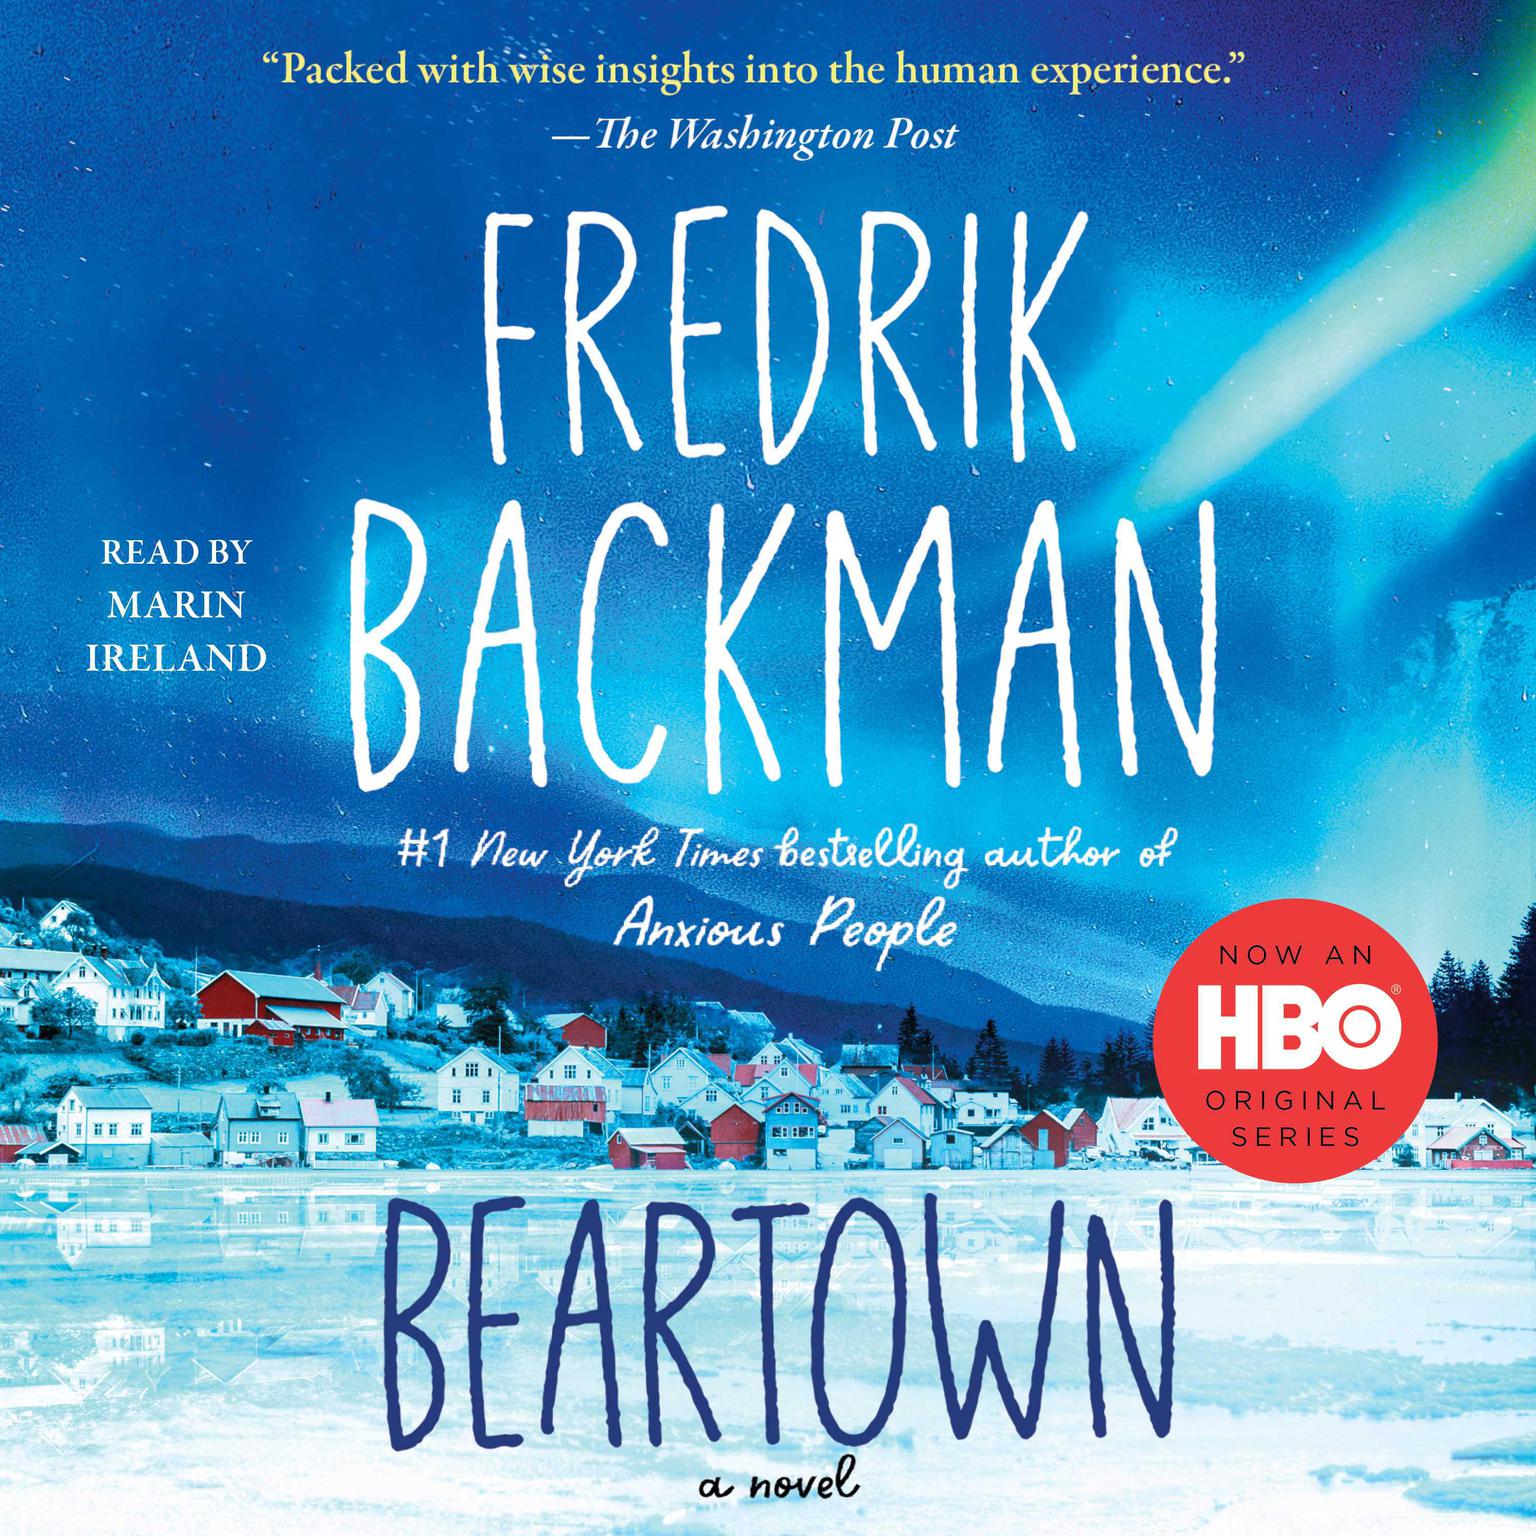 Beartown: A Novel Audiobook, by Fredrik Backman